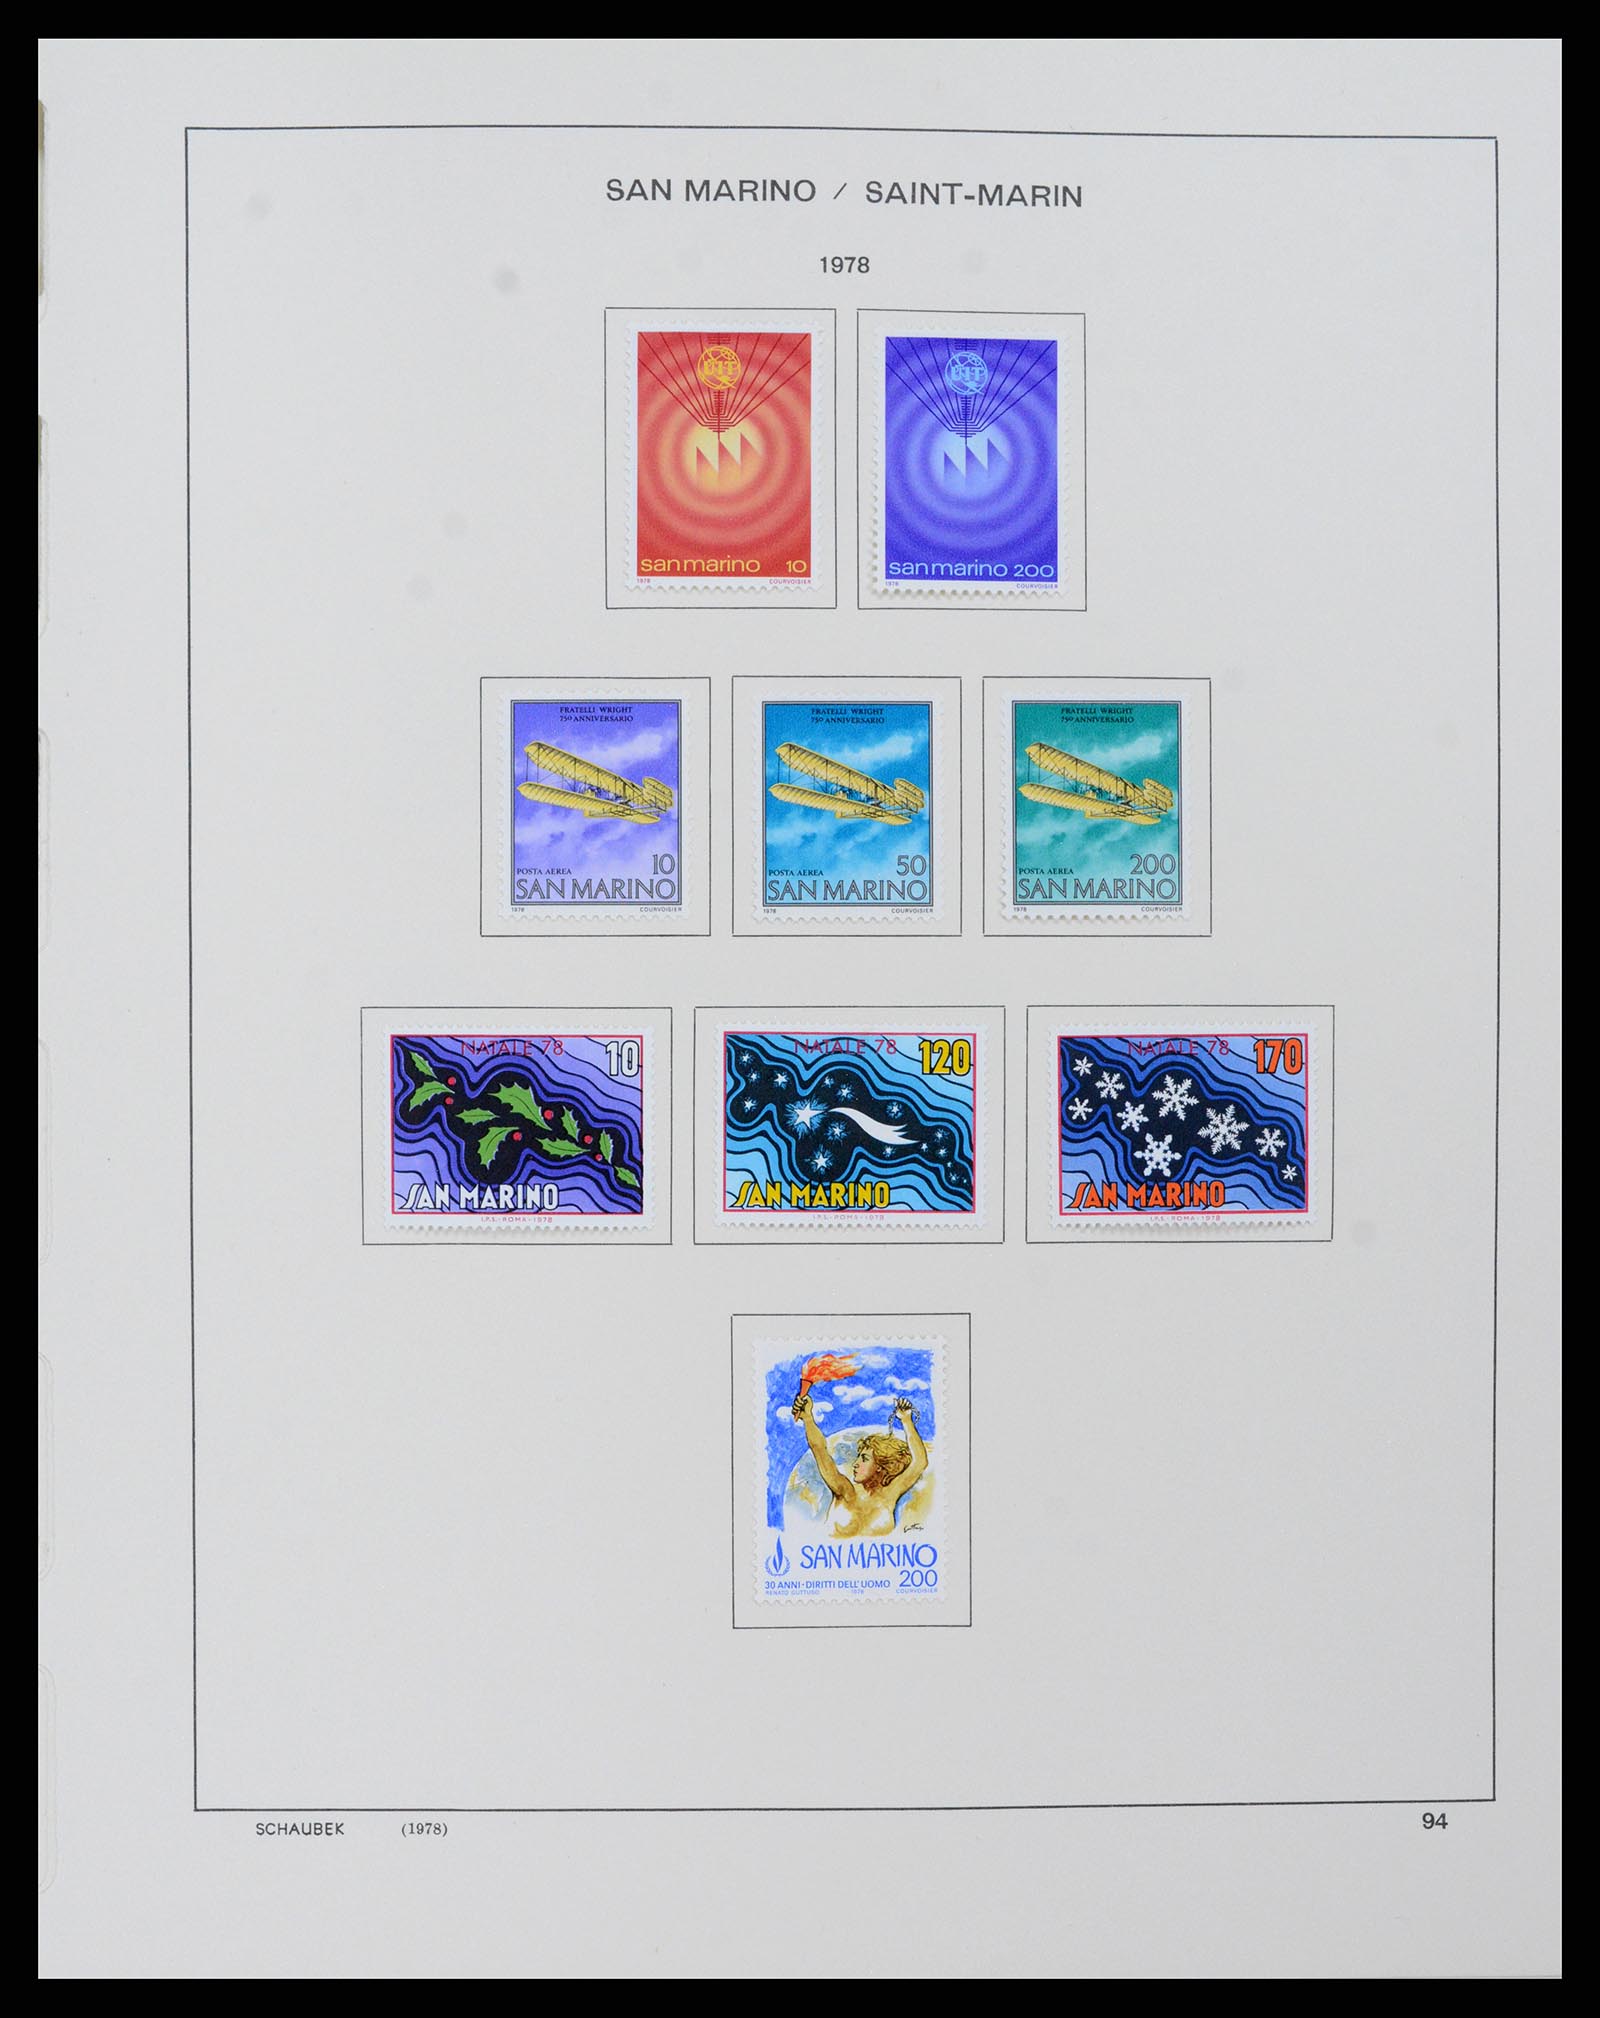 37556 096 - Stamp collection 37556 San Marino 1877-2017.